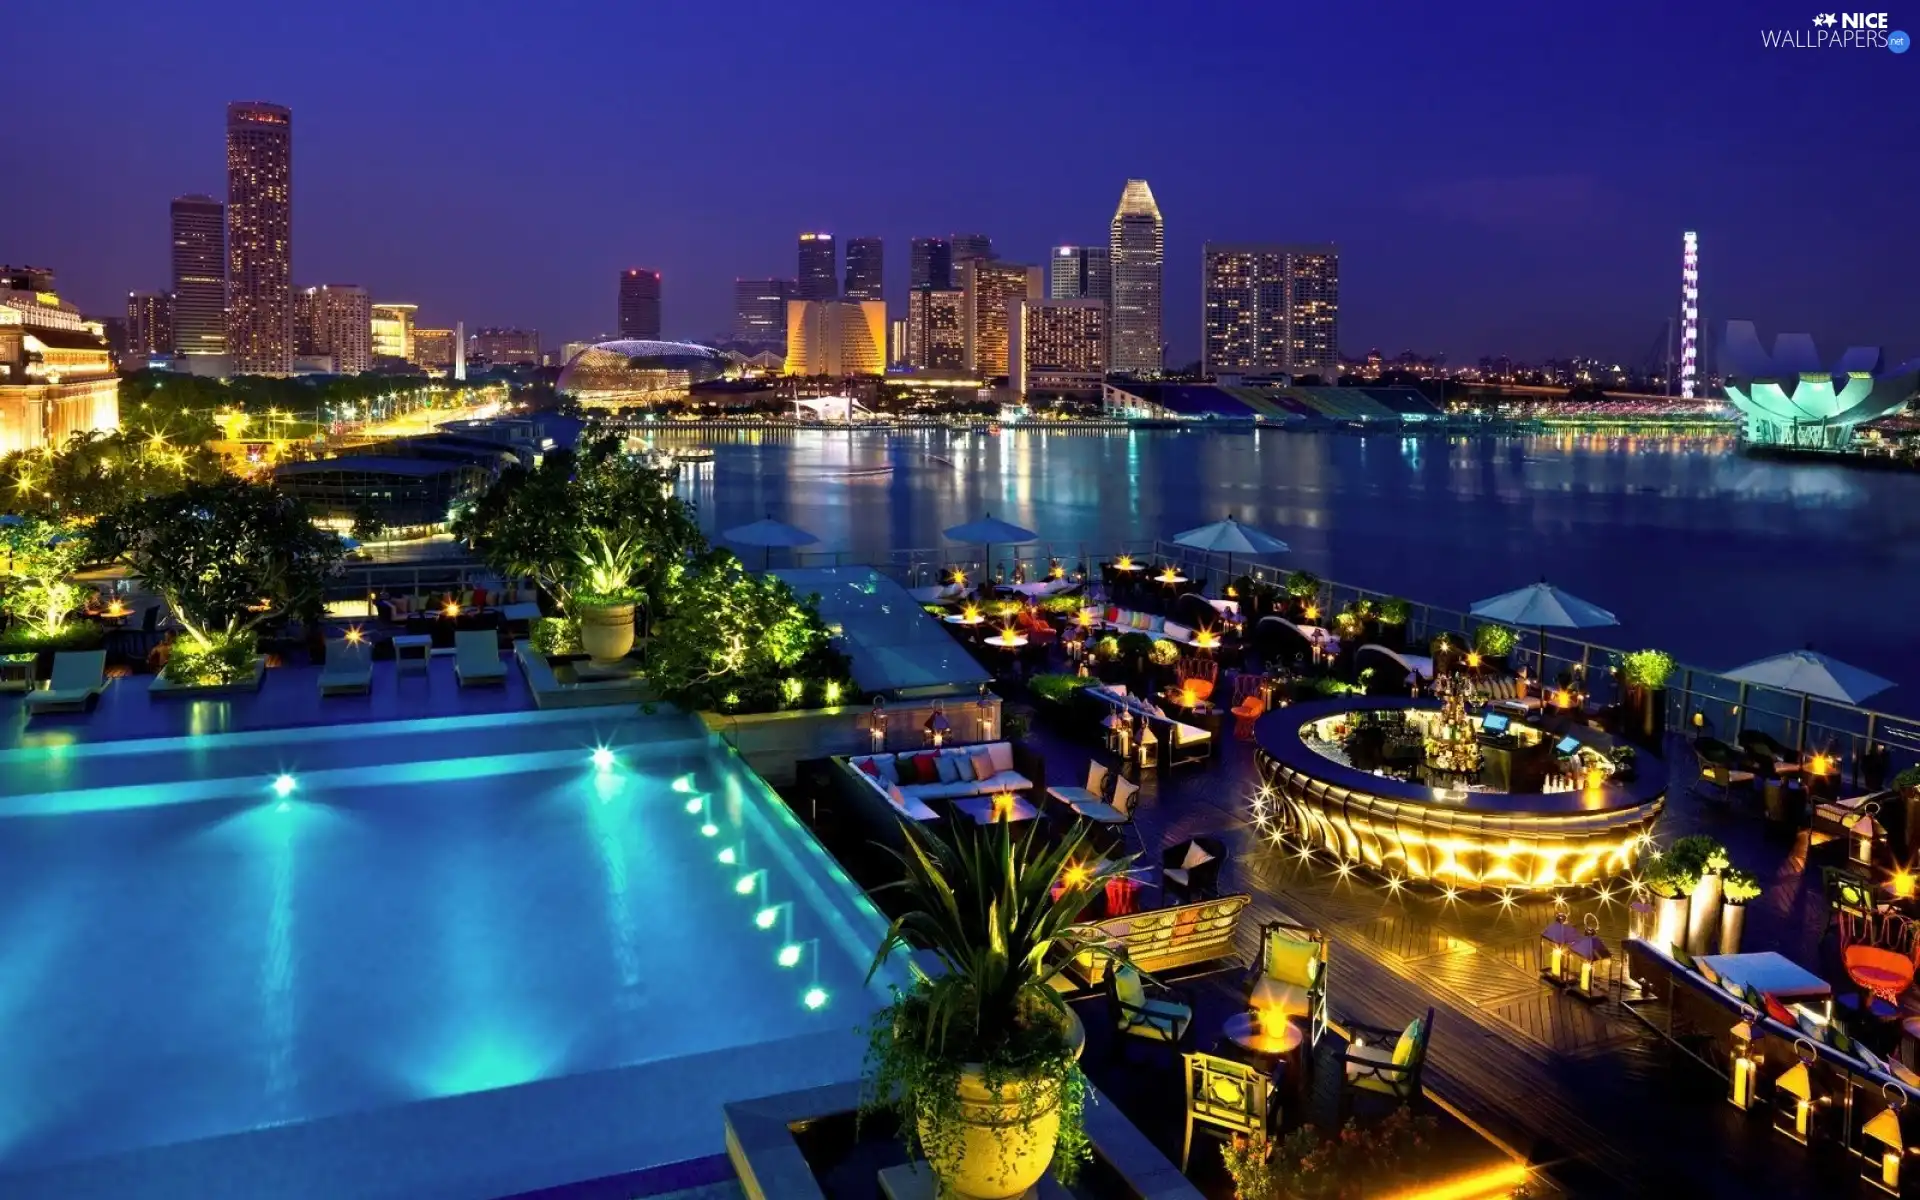 City at Night, Restaurants, Pool